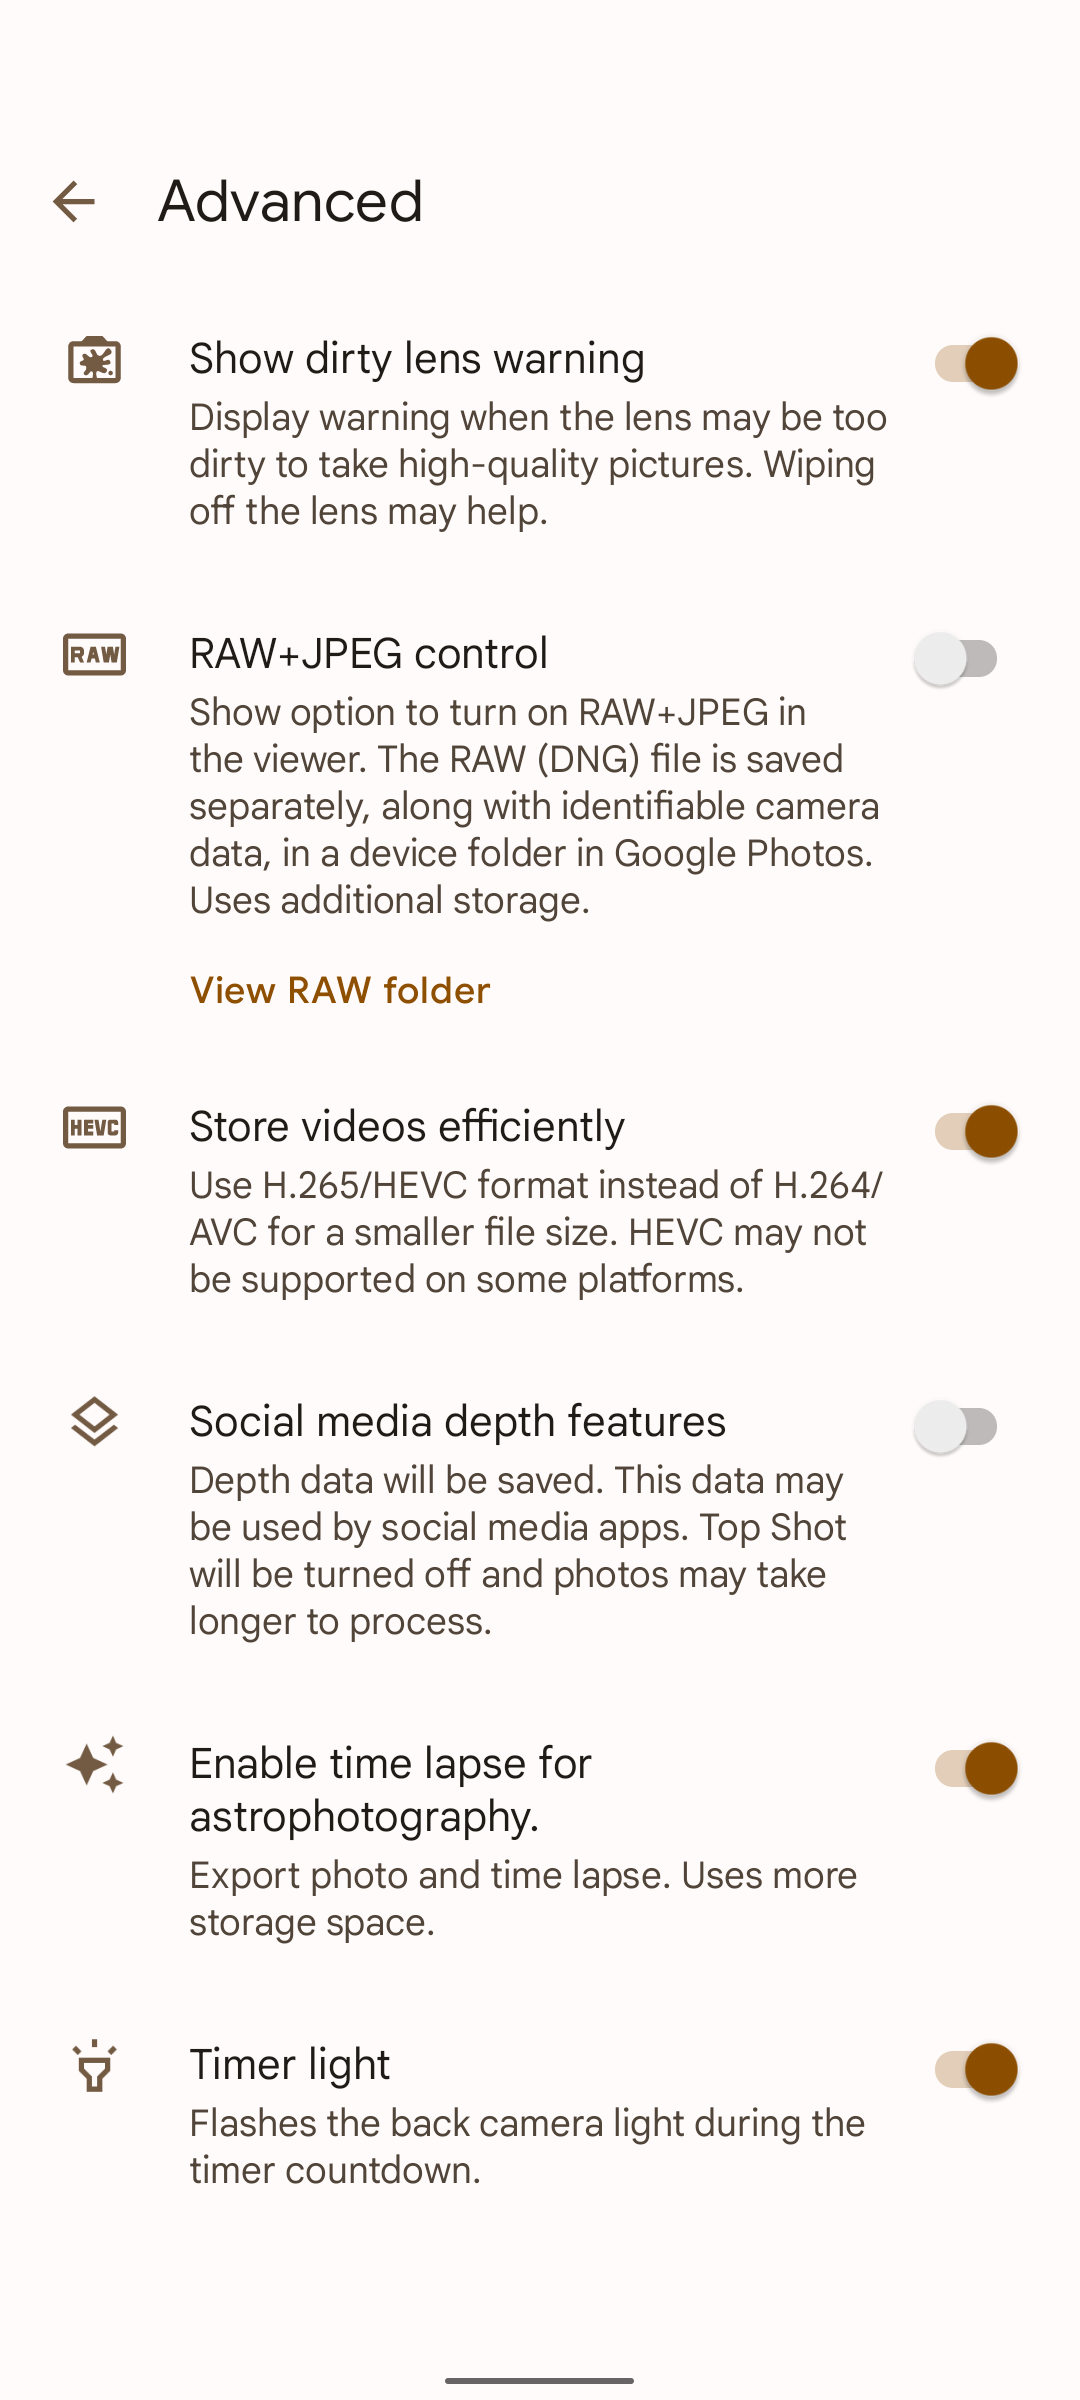 Screenshot of Google Pixel smartphone camera app advanced settings